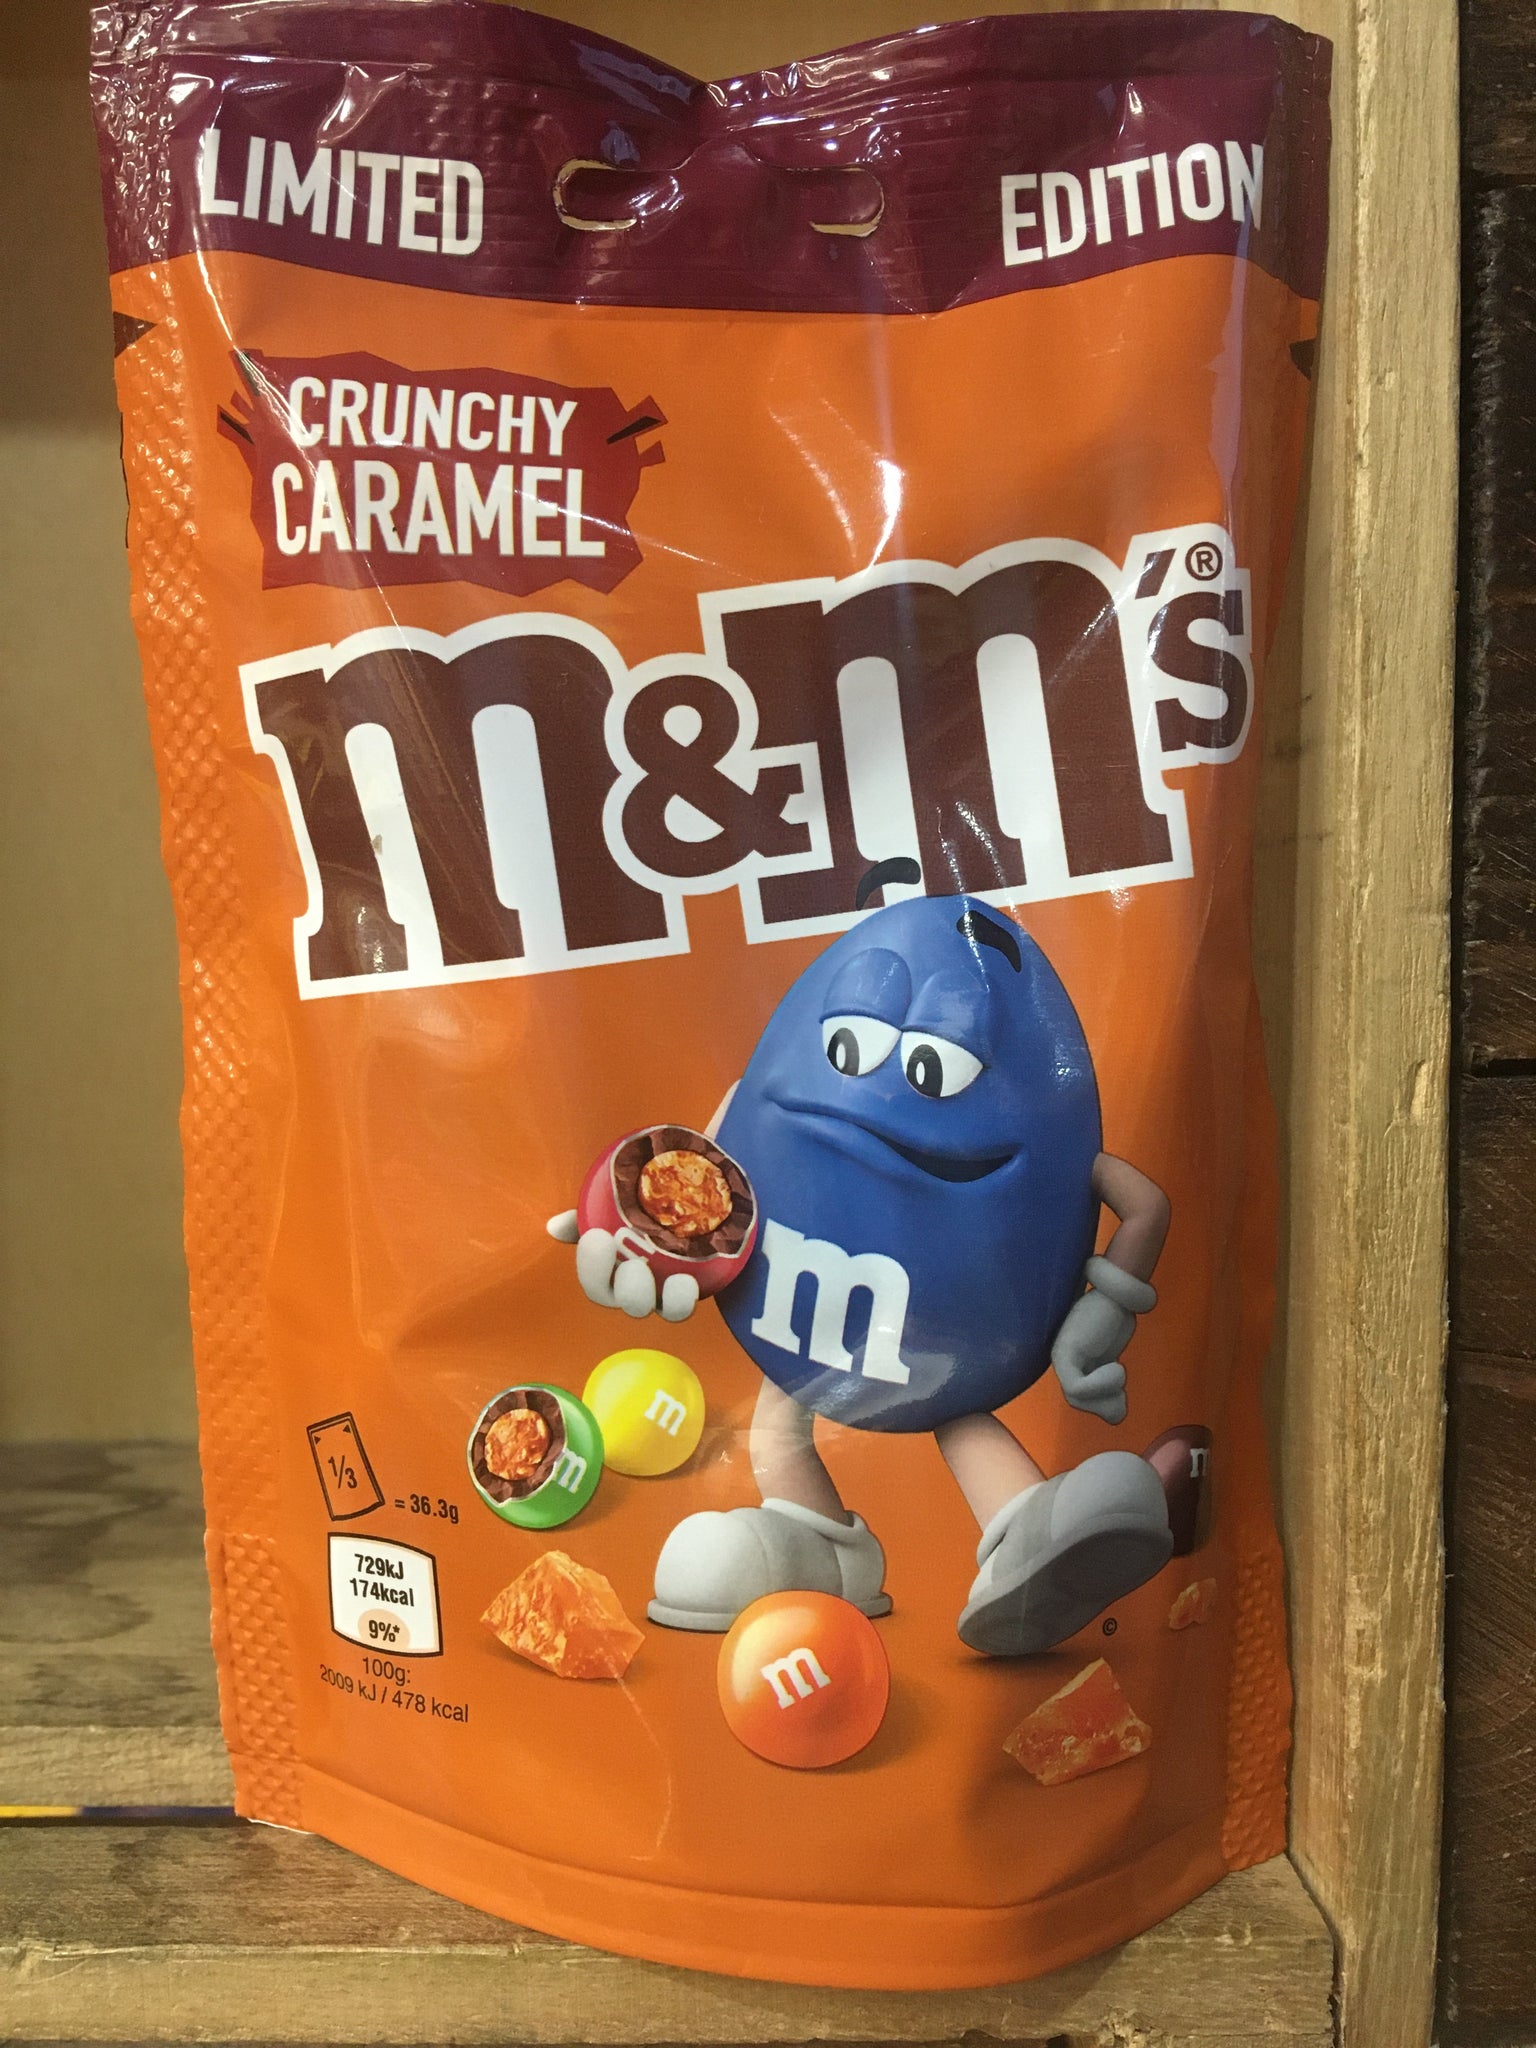 Crunchy caramel M&Ms have landed in the UK